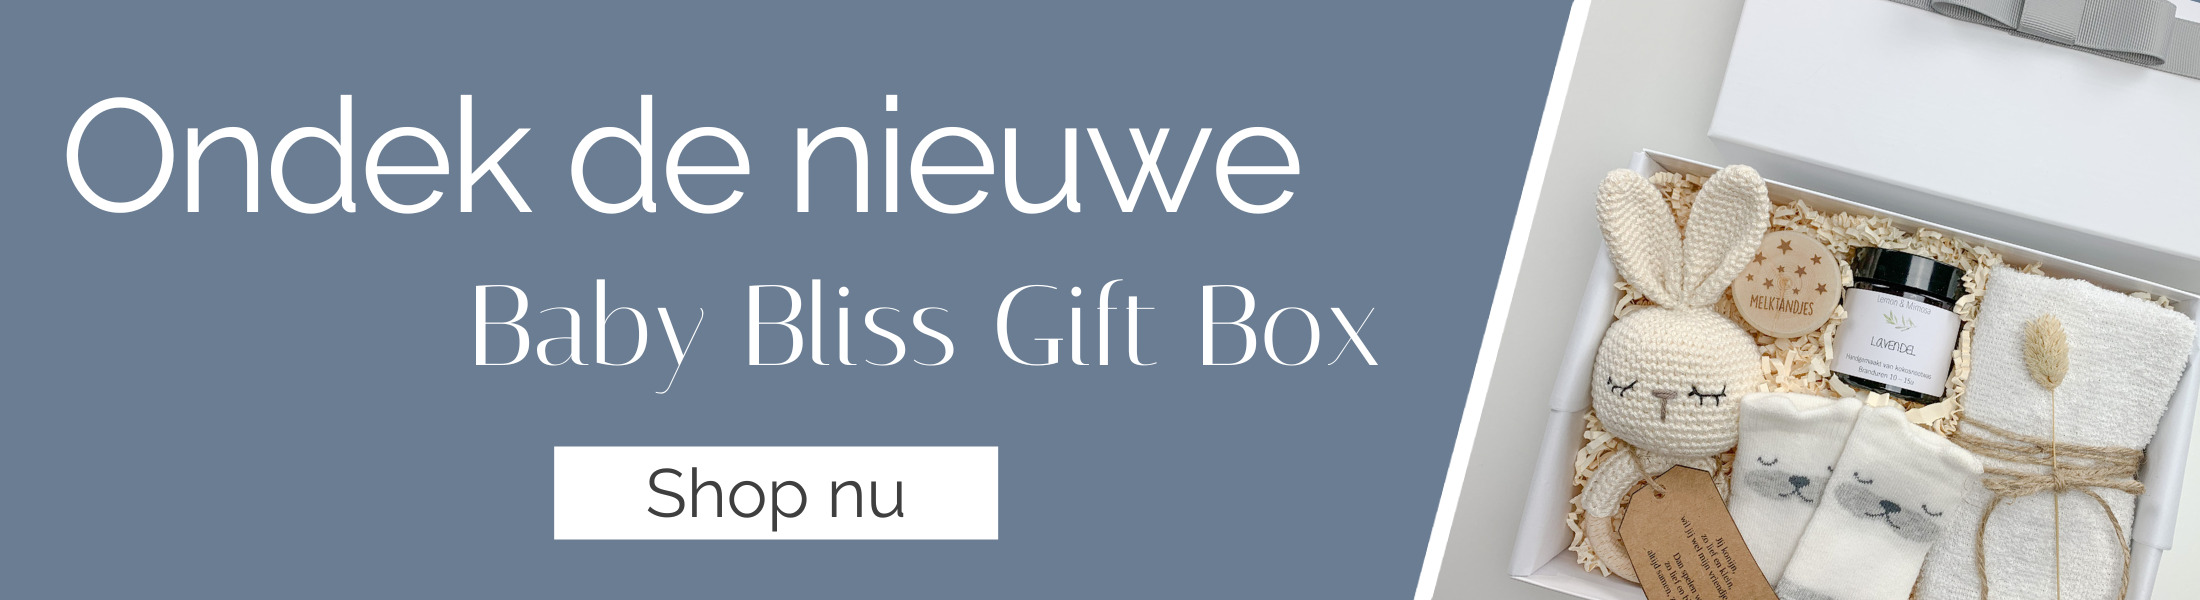 Baby Bliss Gift Box